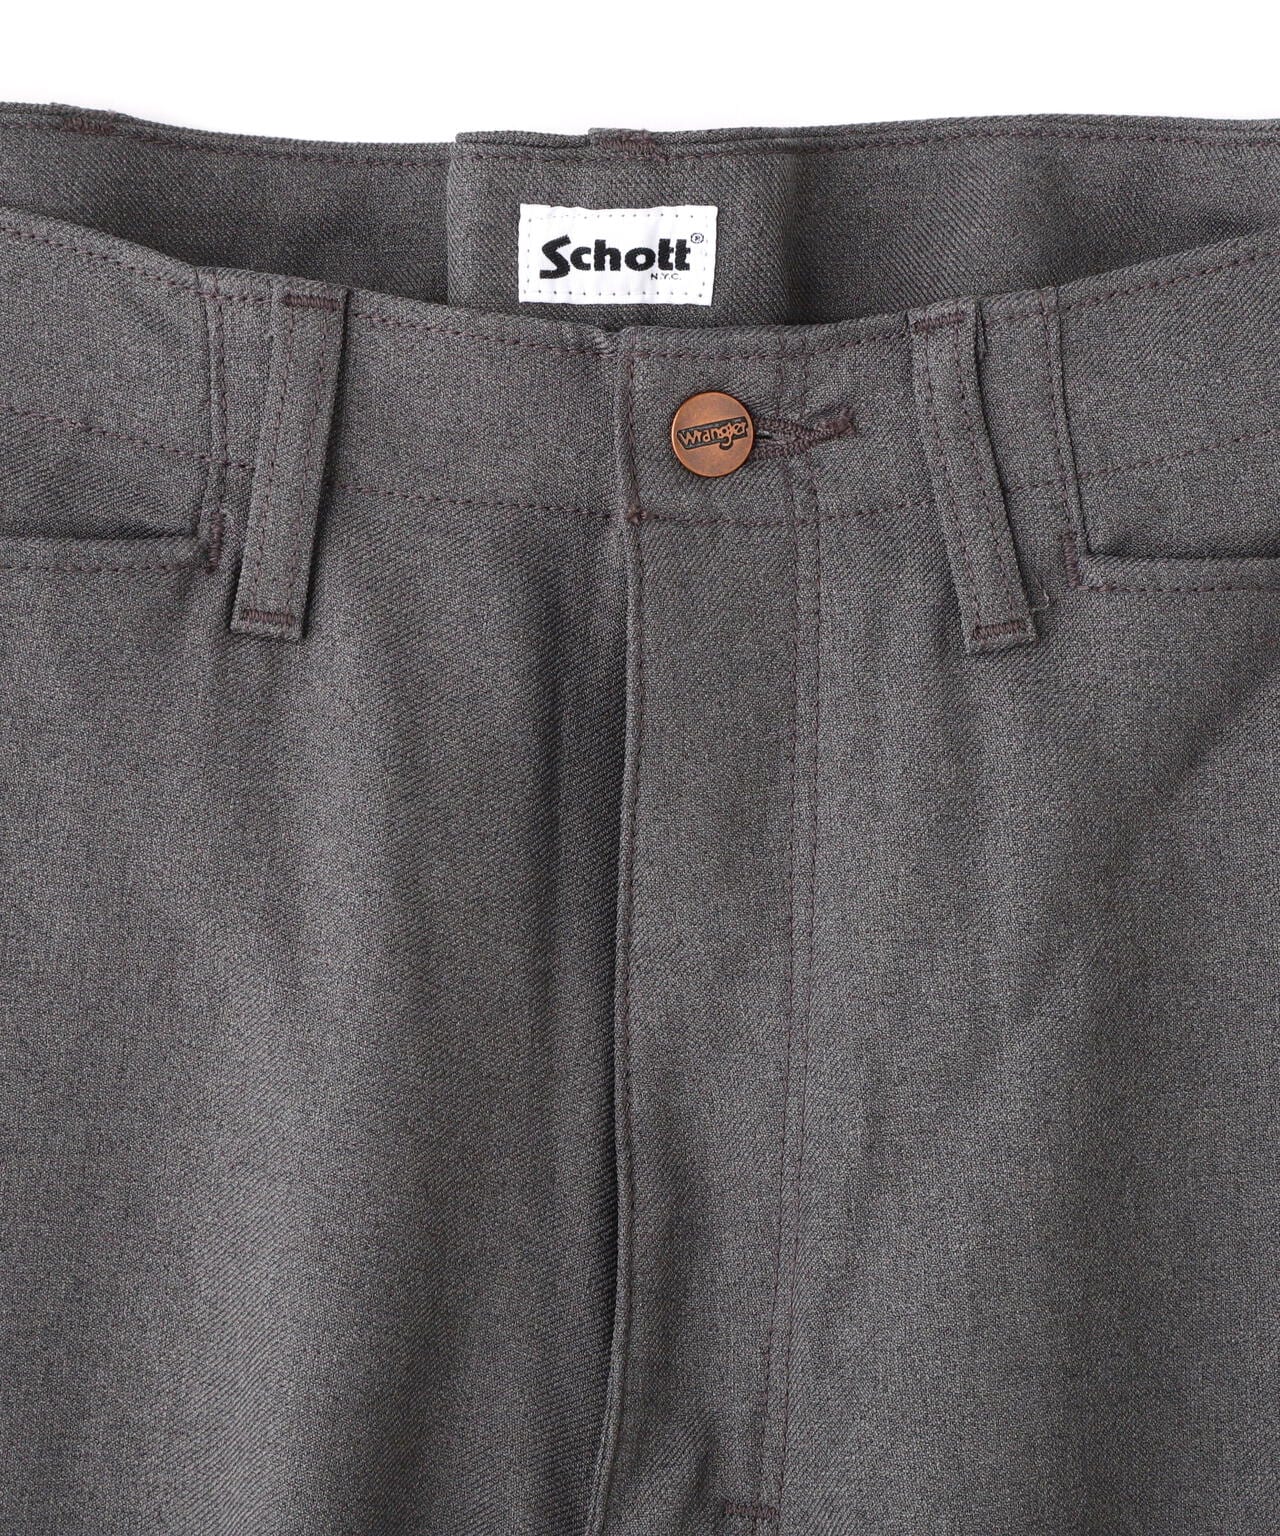 Schott/ショット/×Wrangler/ラングラー/WRANCHER WIDE DRESS PANTS/ランチャー ワイド ドレスパンツ